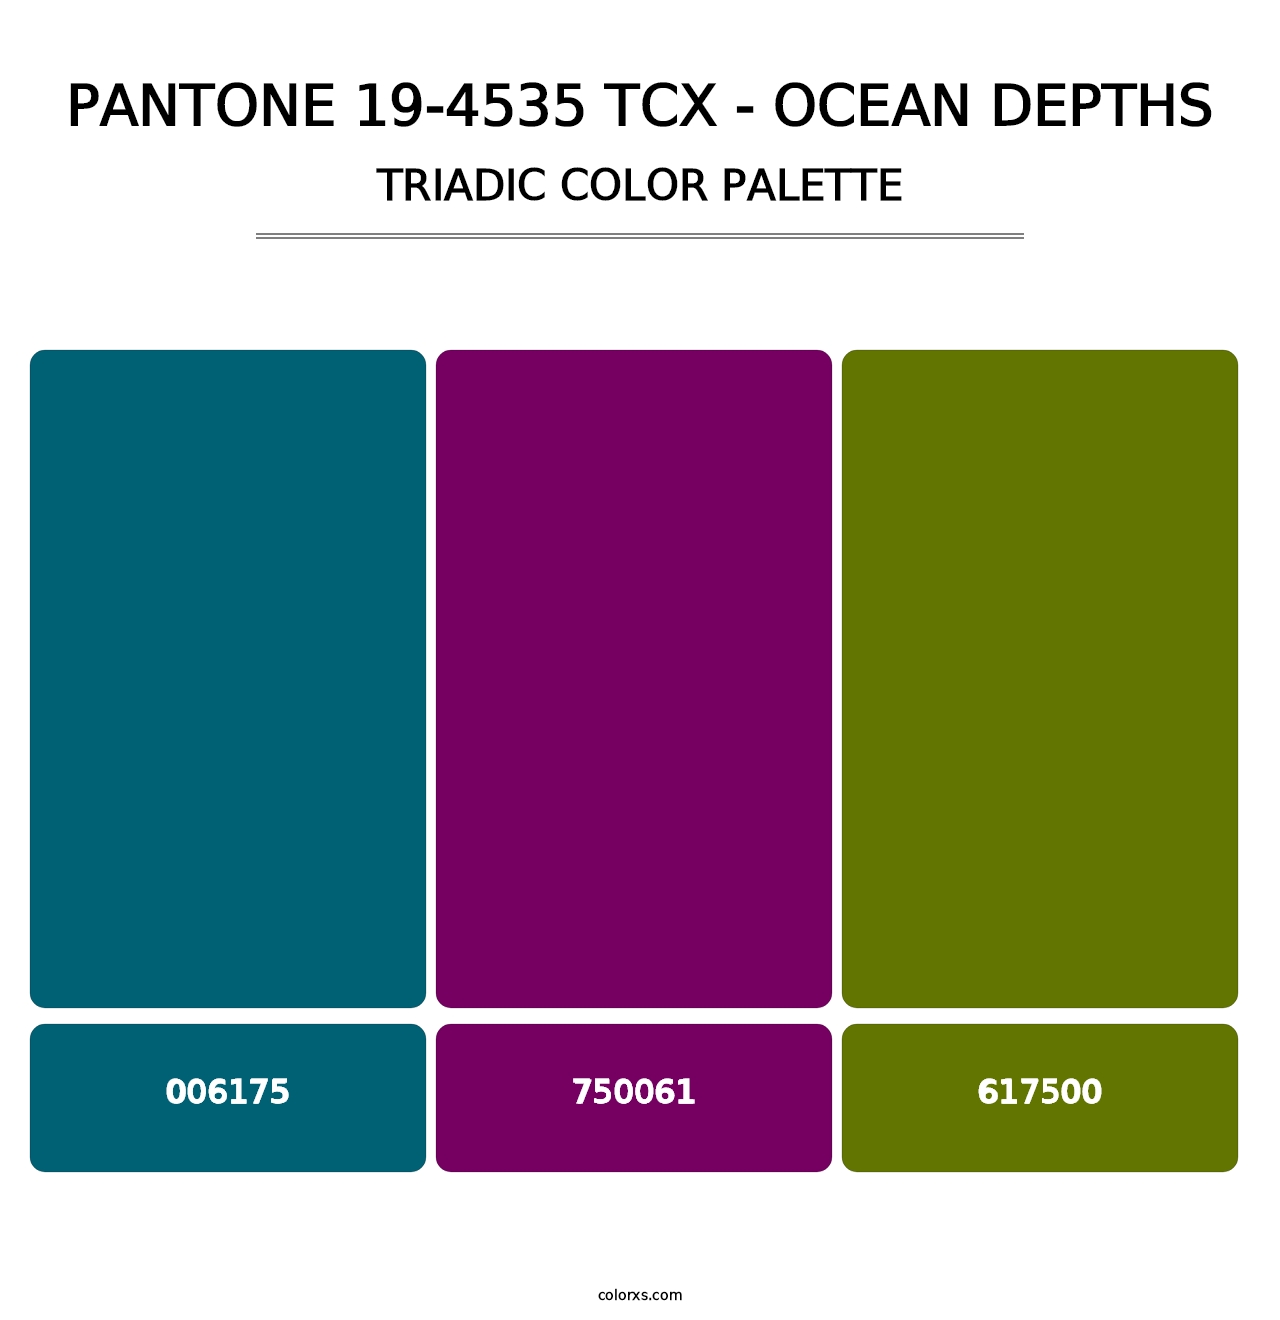 PANTONE 19-4535 TCX - Ocean Depths - Triadic Color Palette